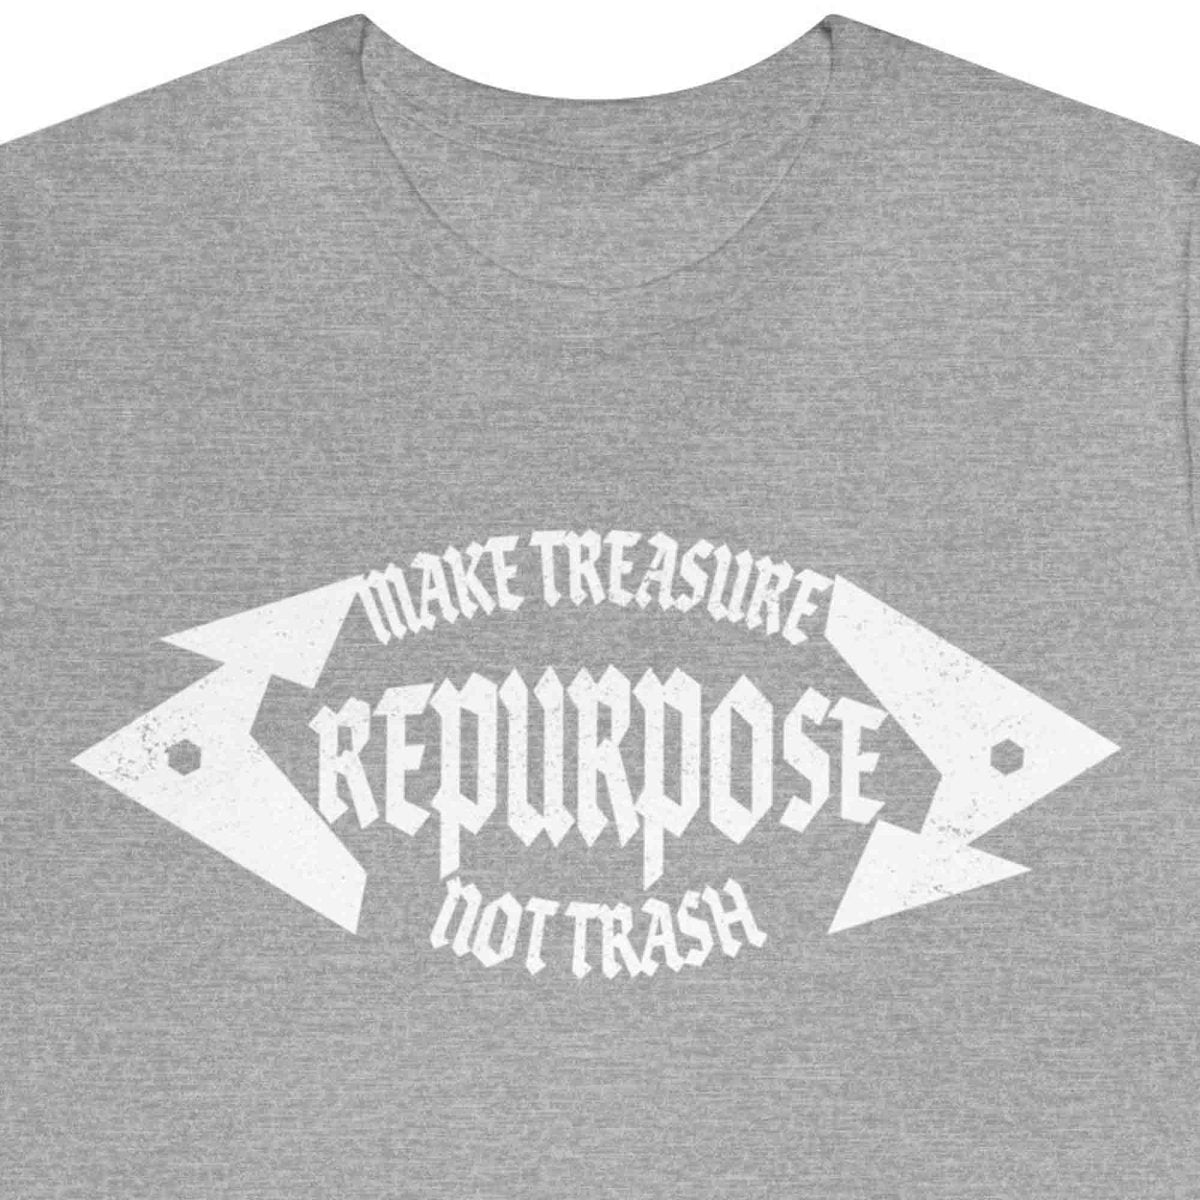 Repurpose Premium T-Shirt, Make Treasure Not Trash, Recycle, ReUse, Remake, Redo, DIY, Reclaim, Upcycle, Self Reliance, Fix It